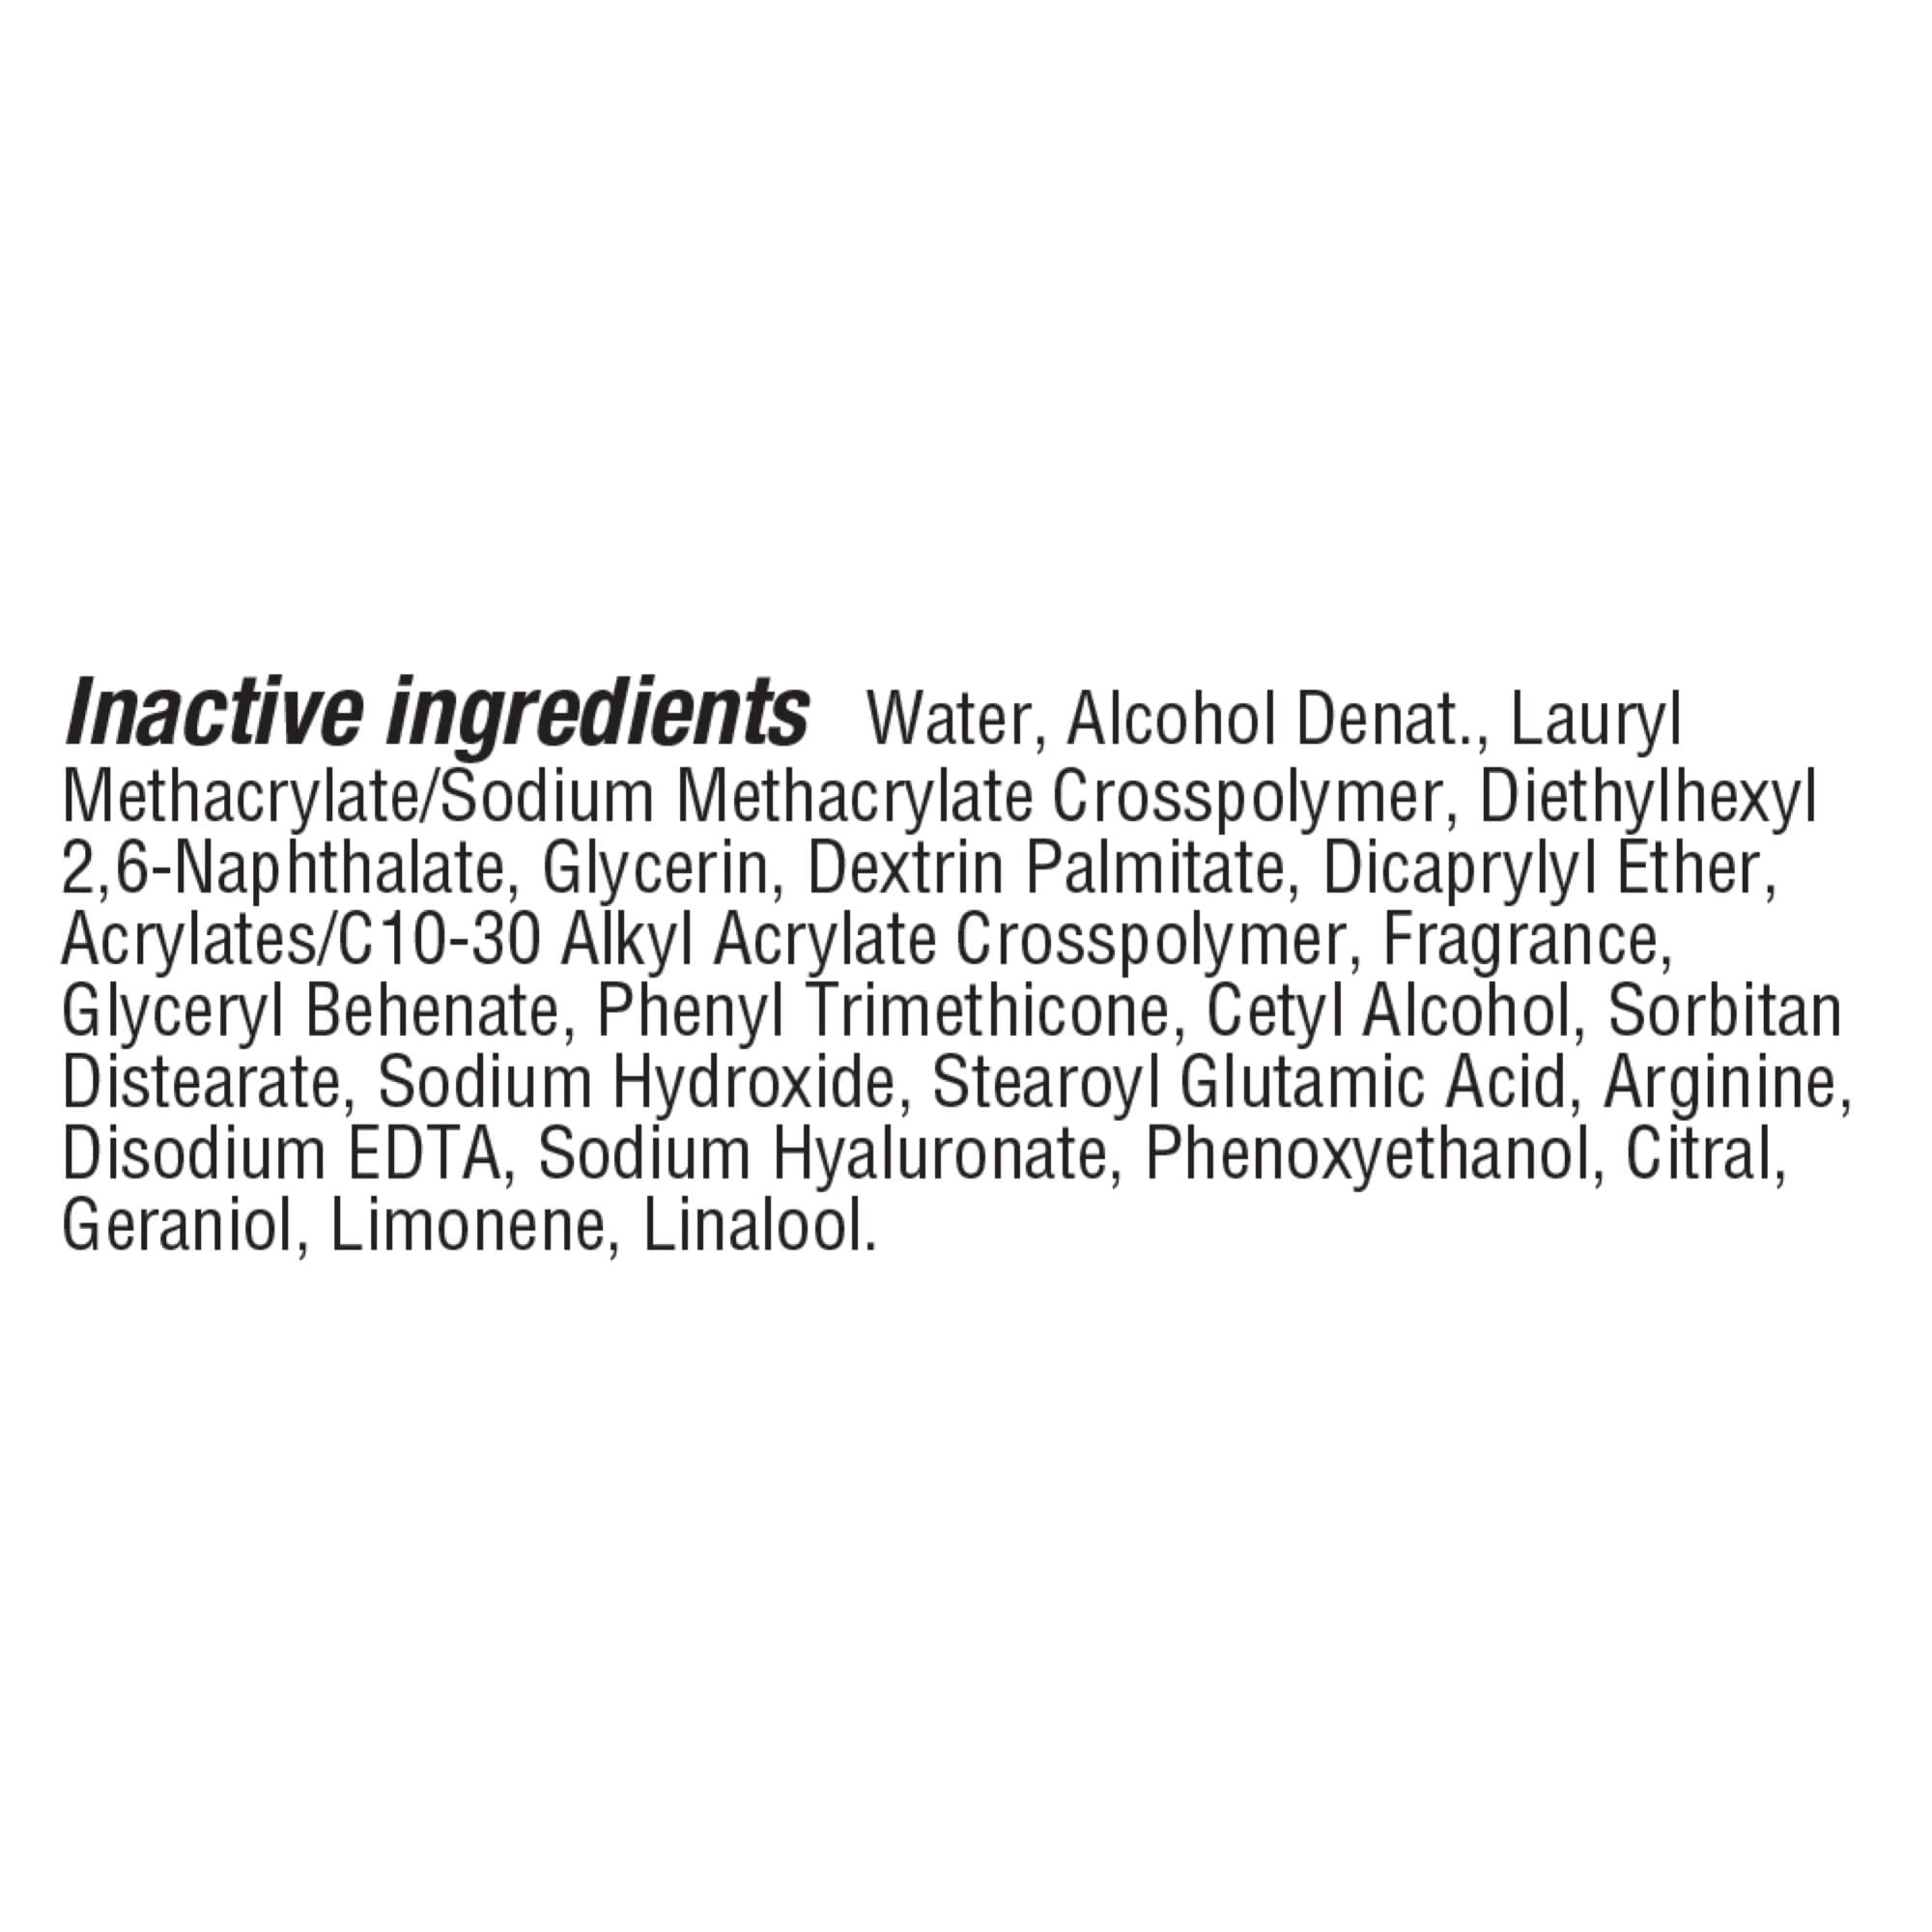 Biore UV Aqua Rich SPF 50 Moisturizing Sunscreen for Face, Oxybenzone & Octinoxate Free, Dermatologist Tested, Vegan, Cruelty Free, For Sensitive Skin, 1.7 Oz